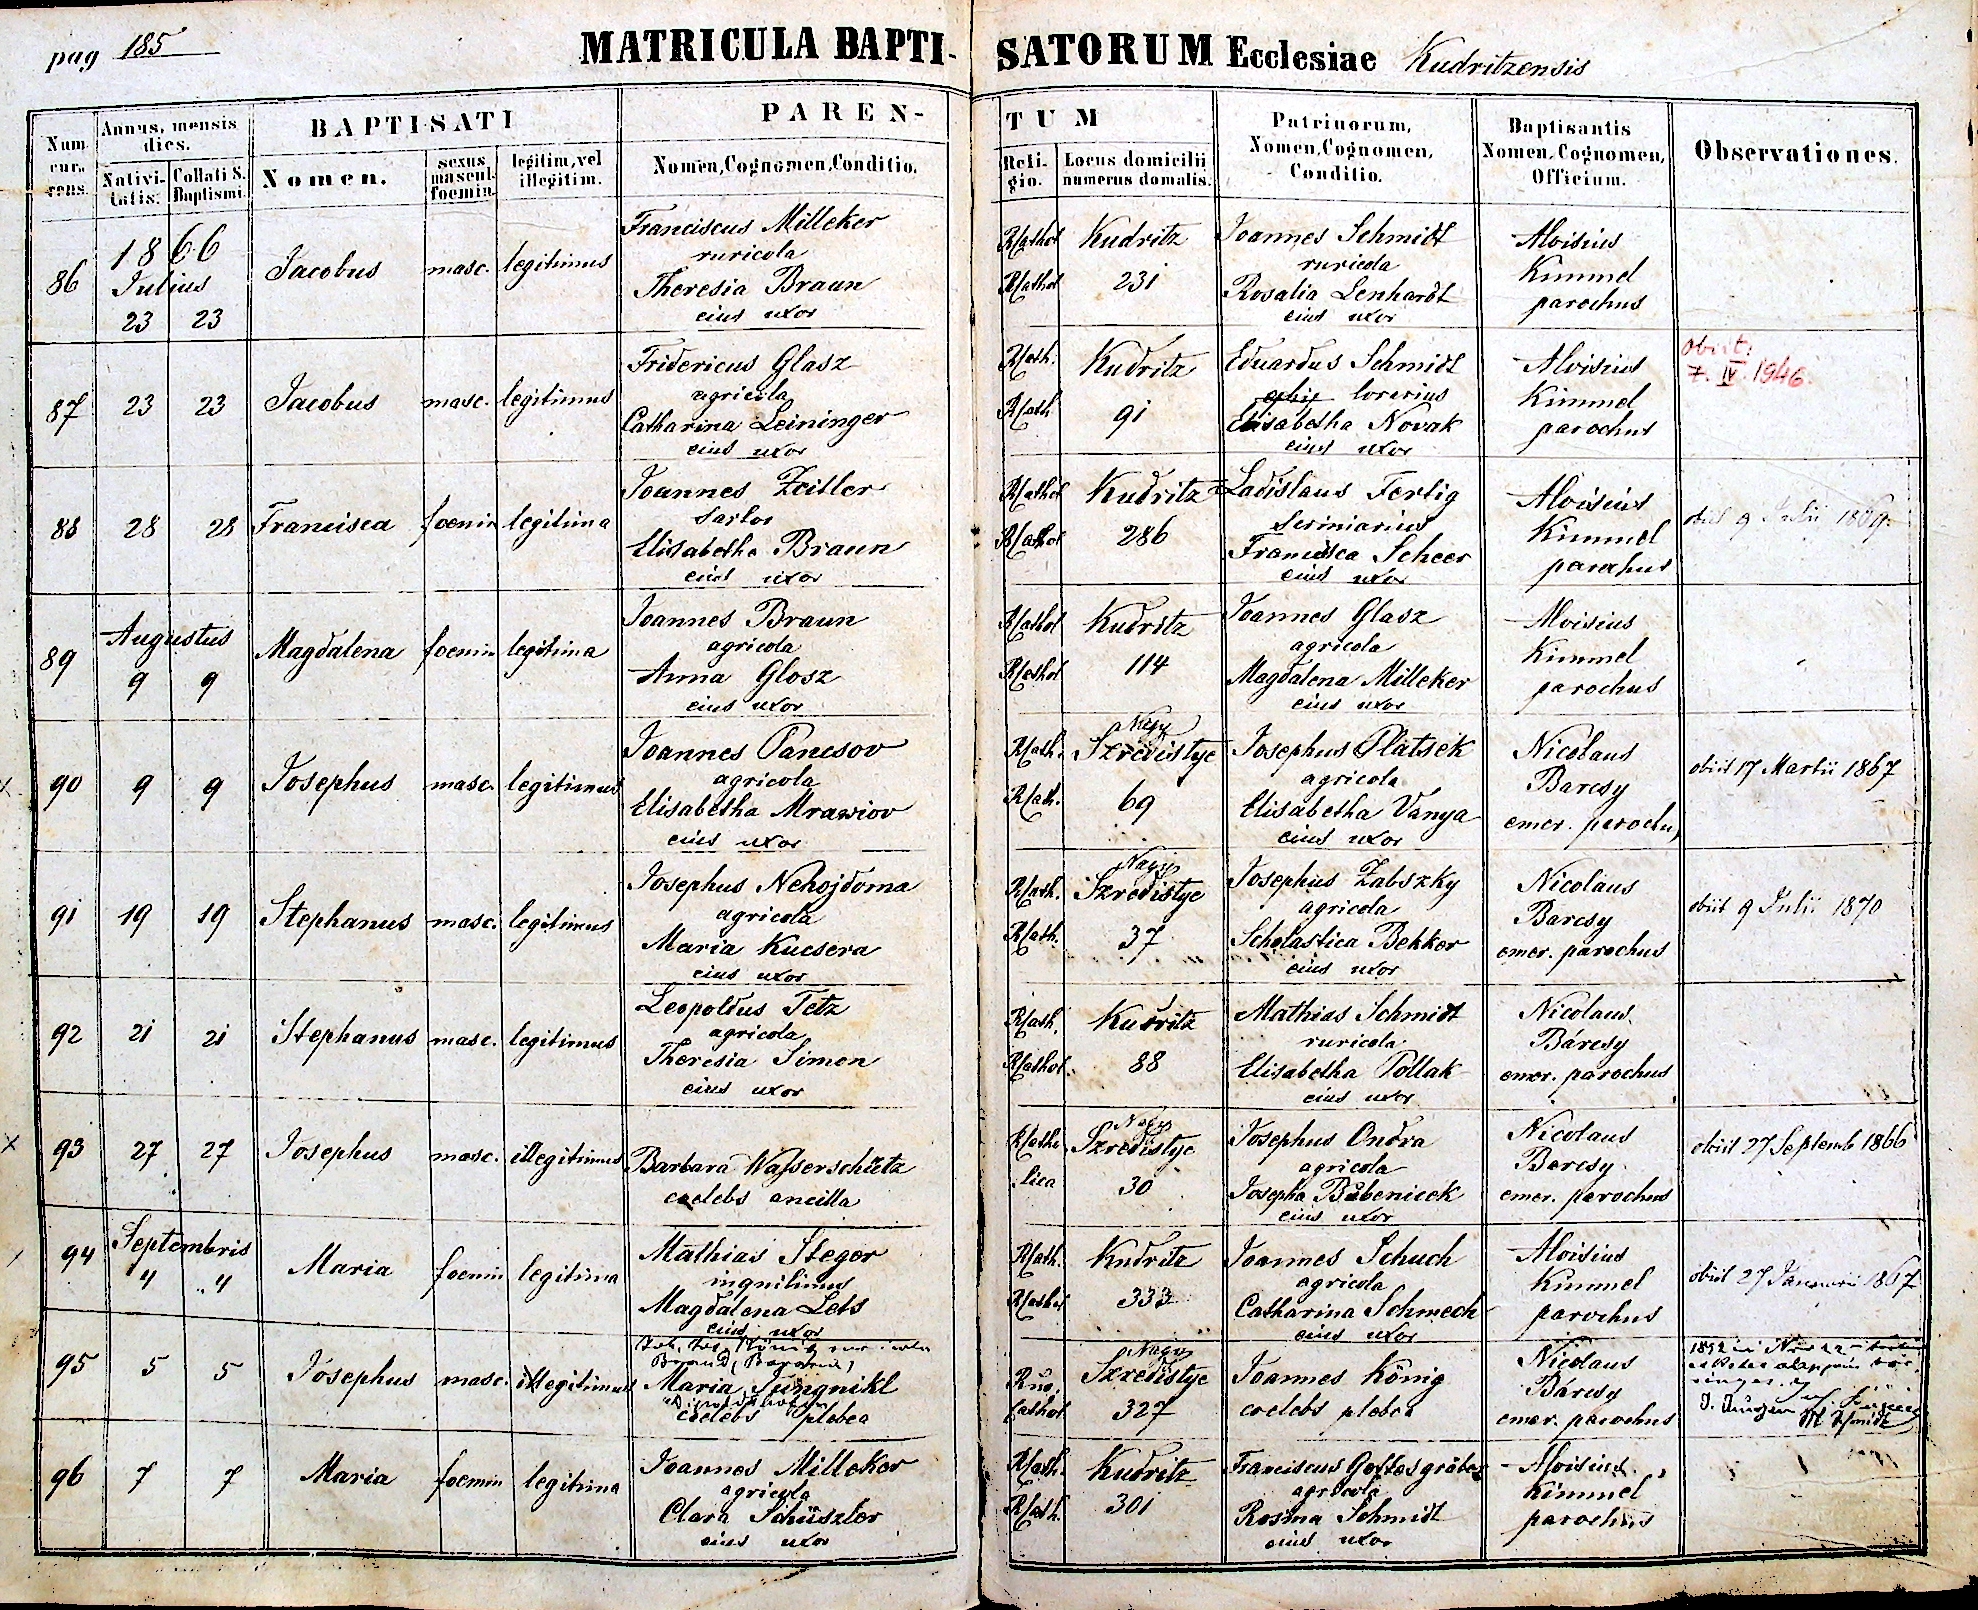 images/church_records/BIRTHS/1852-1870B/185